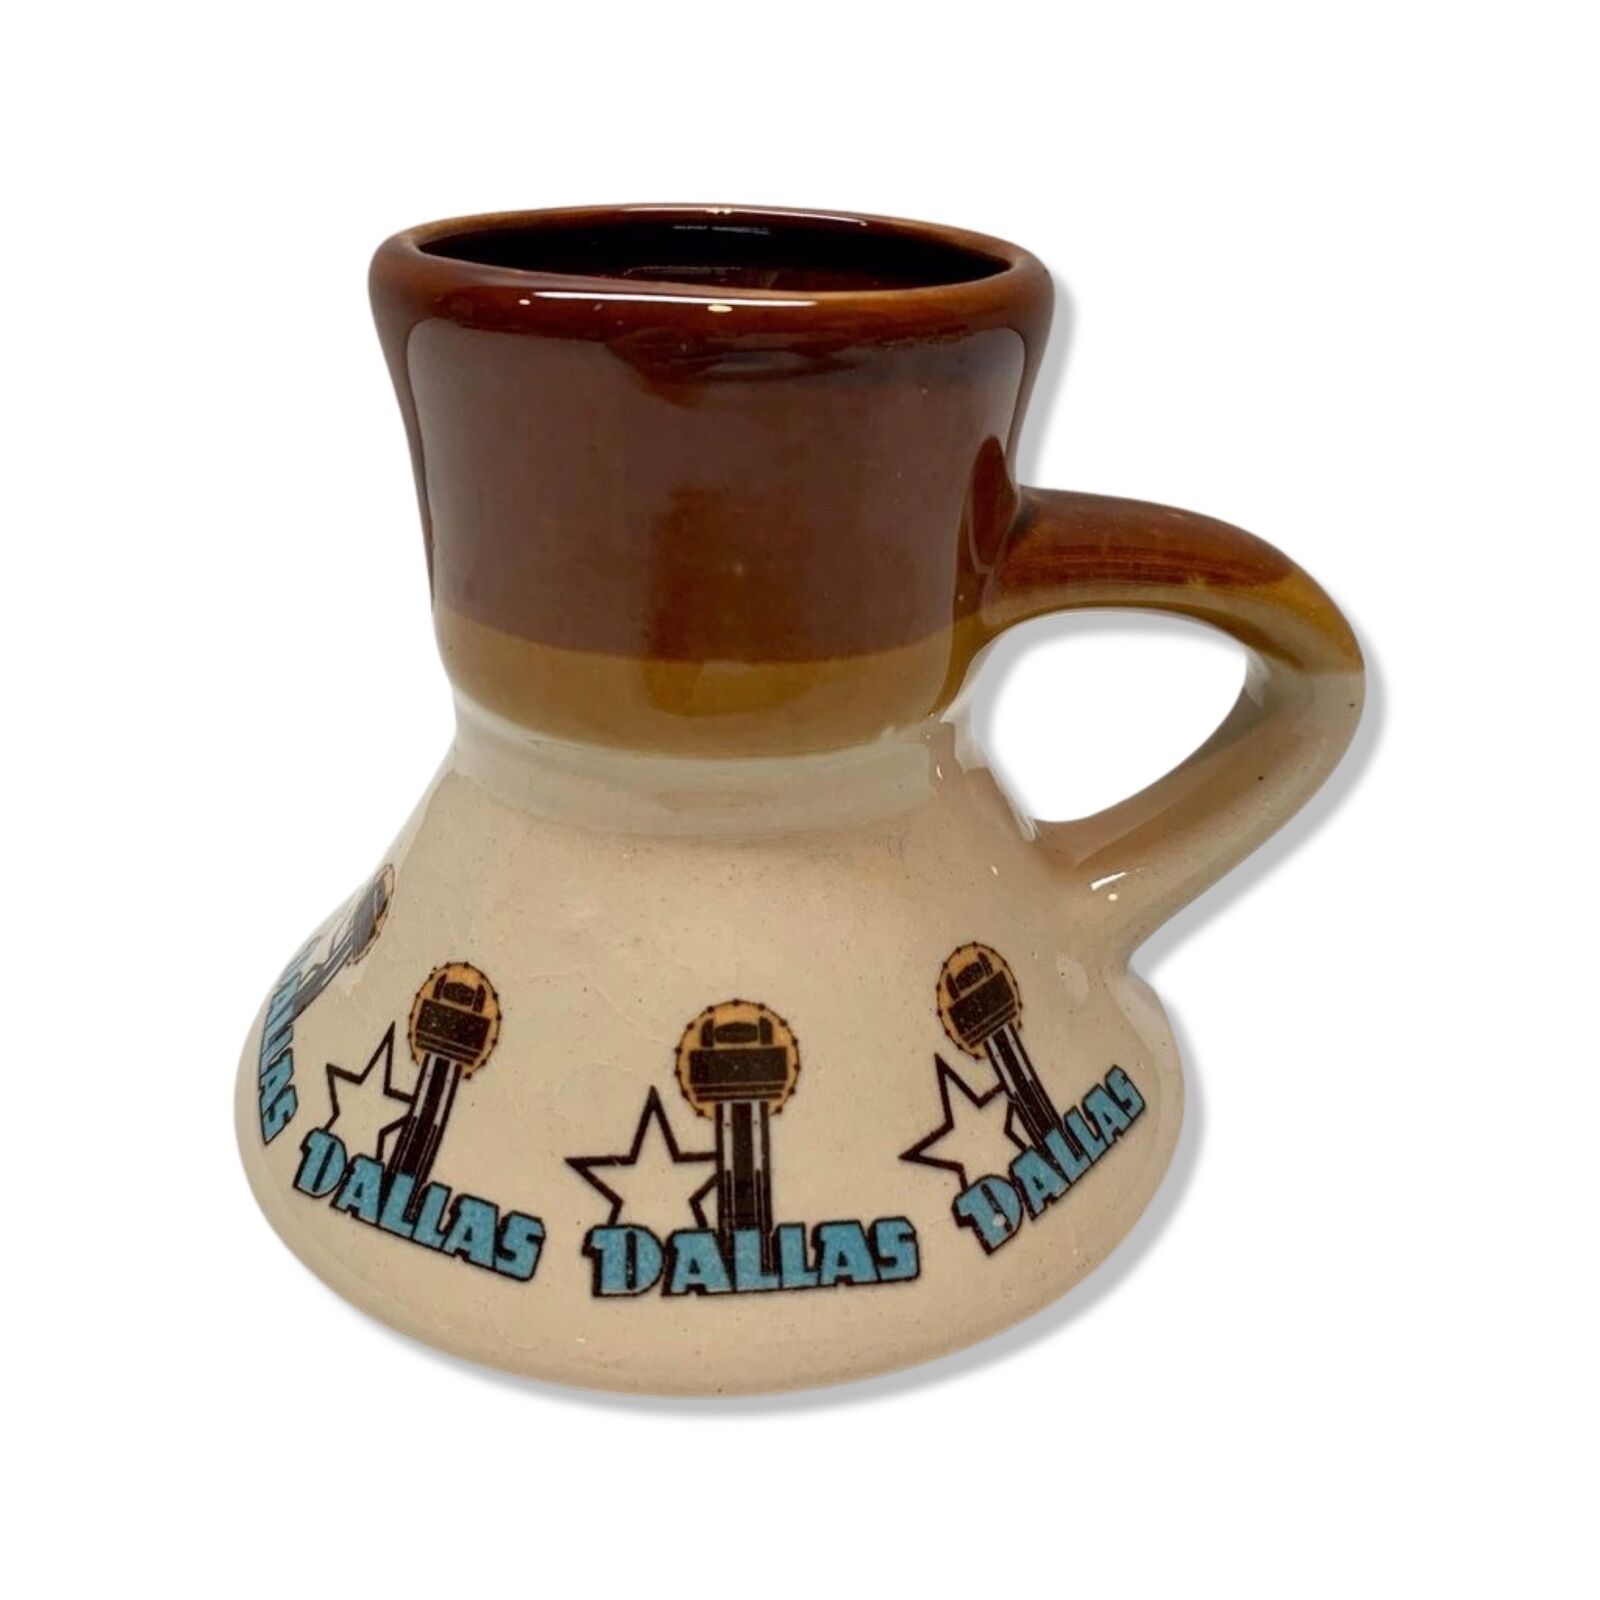 Vintage Dallas Texas Ceramic Travel Mug No Spill